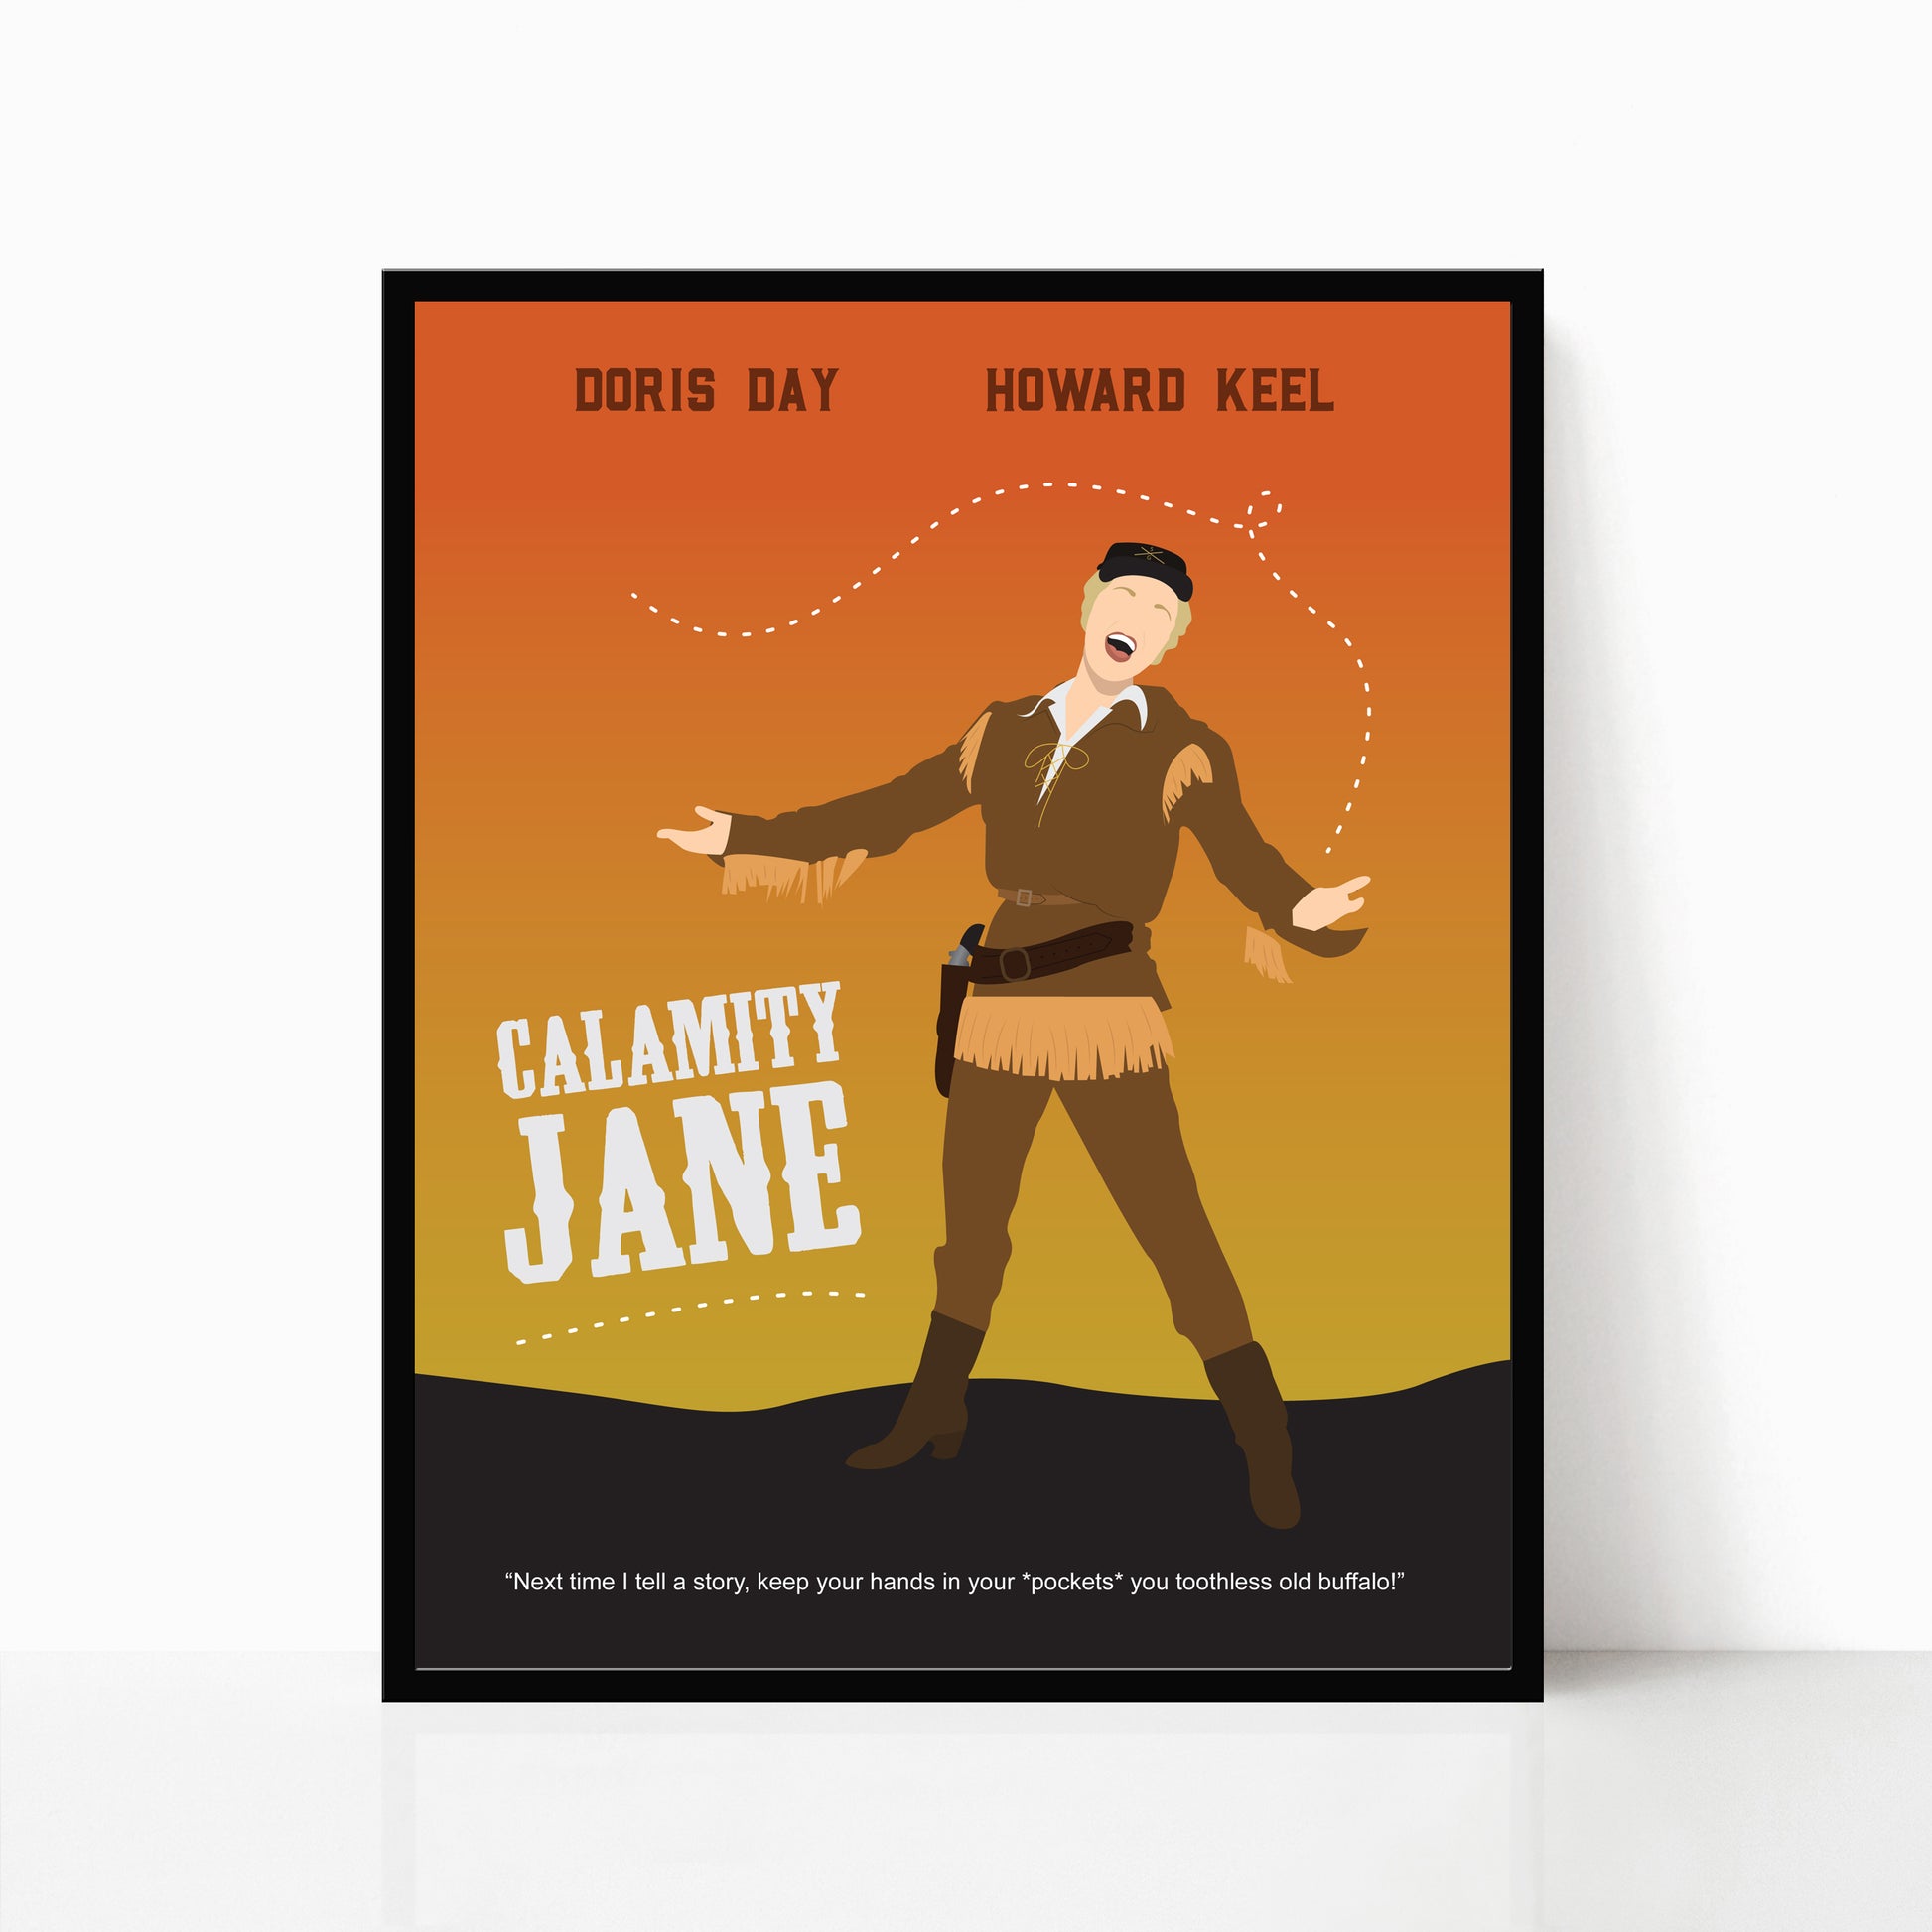 Calamity Jane Poster - Doris Day - Alternative Poster by Poppermost Prints